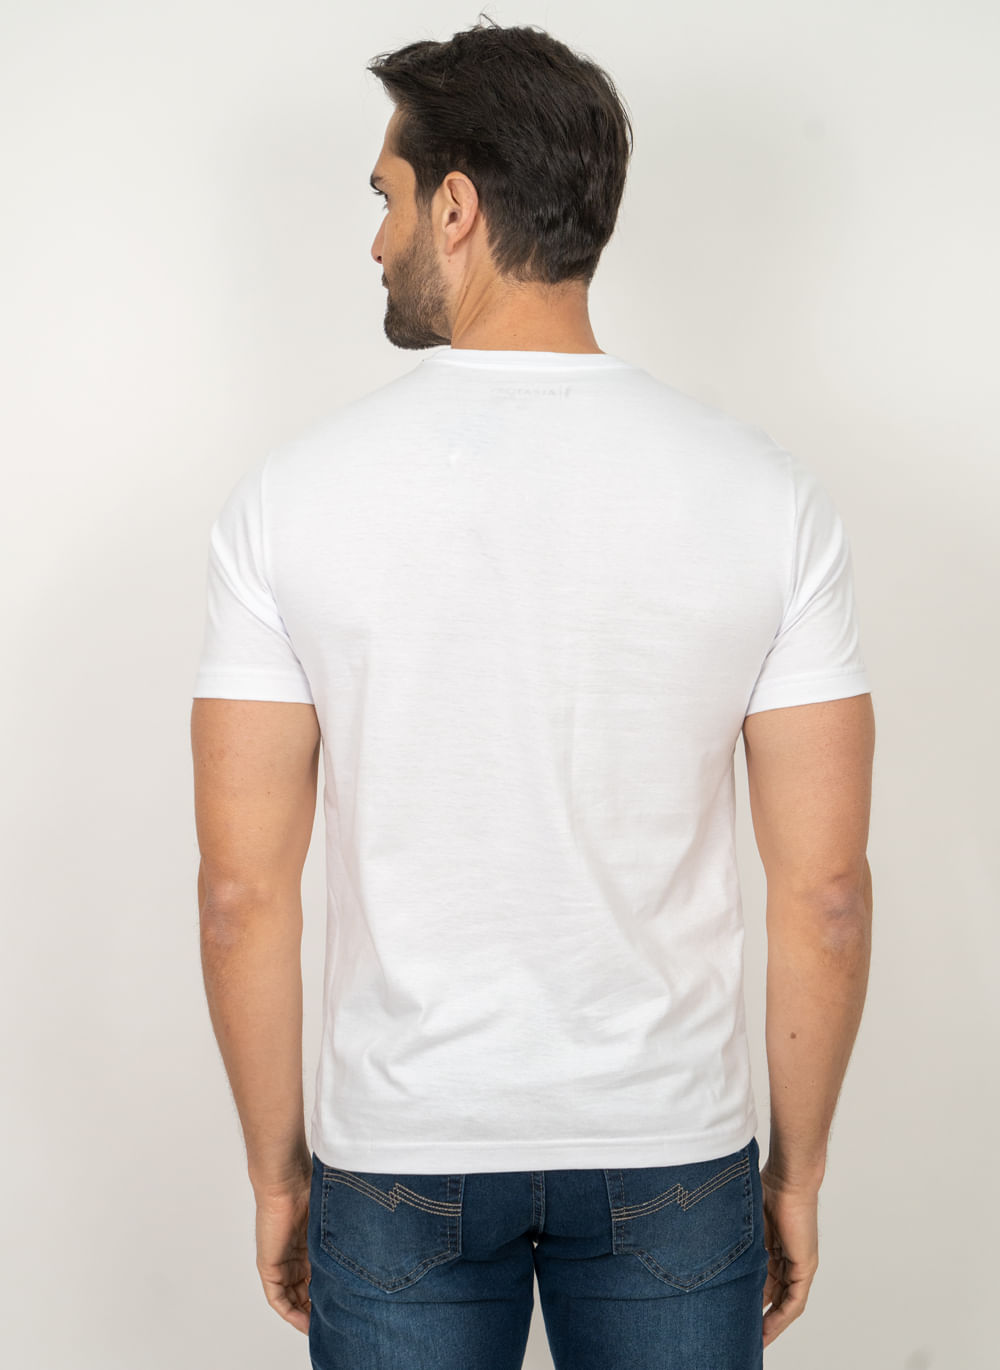 Camiseta-Basica-Aleatory-Fit-Branca-Branco-P